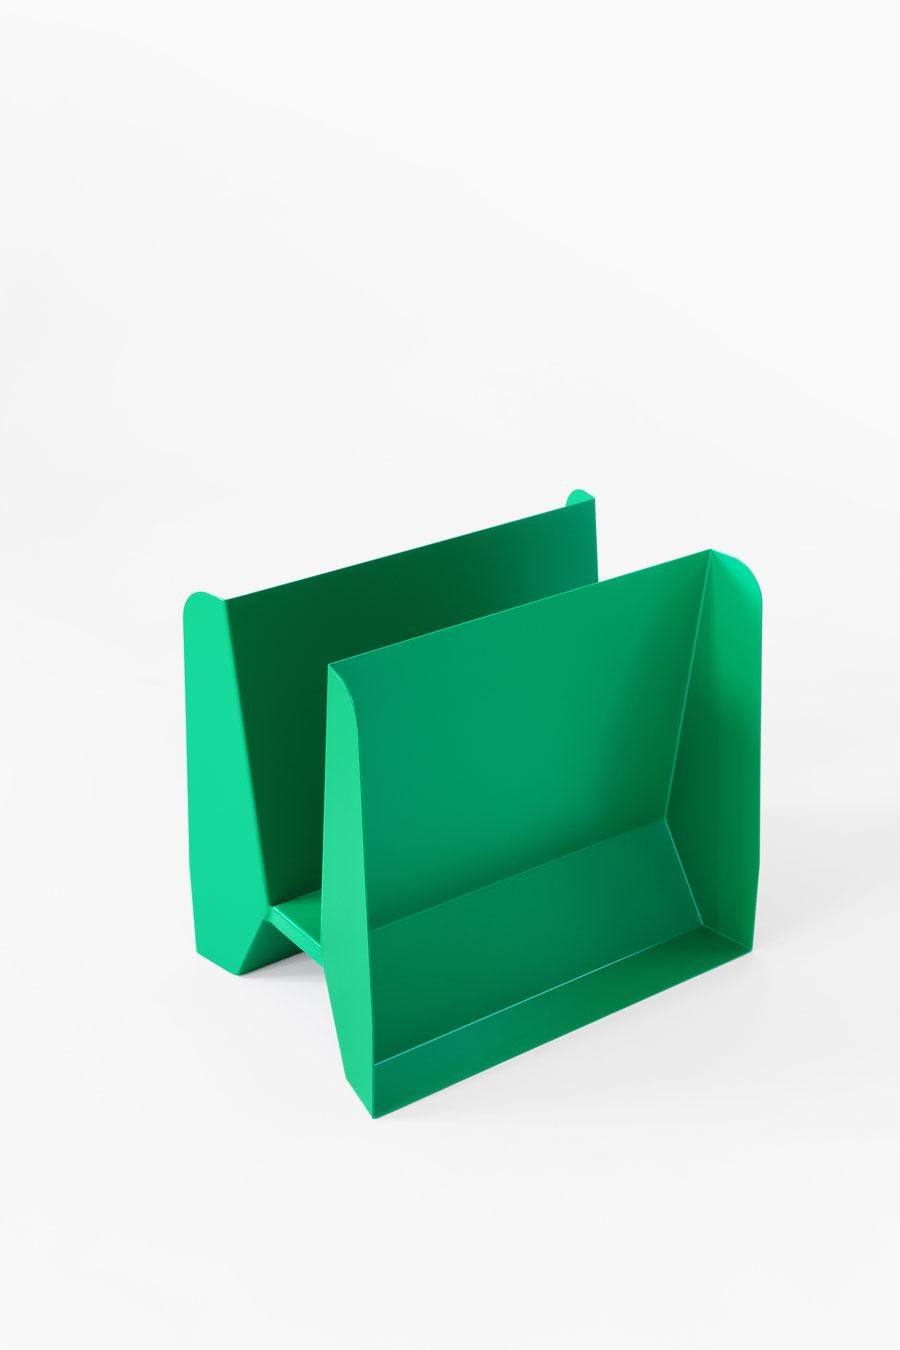 Adolfo Abejon Contemporary 'Adler' Green Metal Sculptural Magazine Rack 5